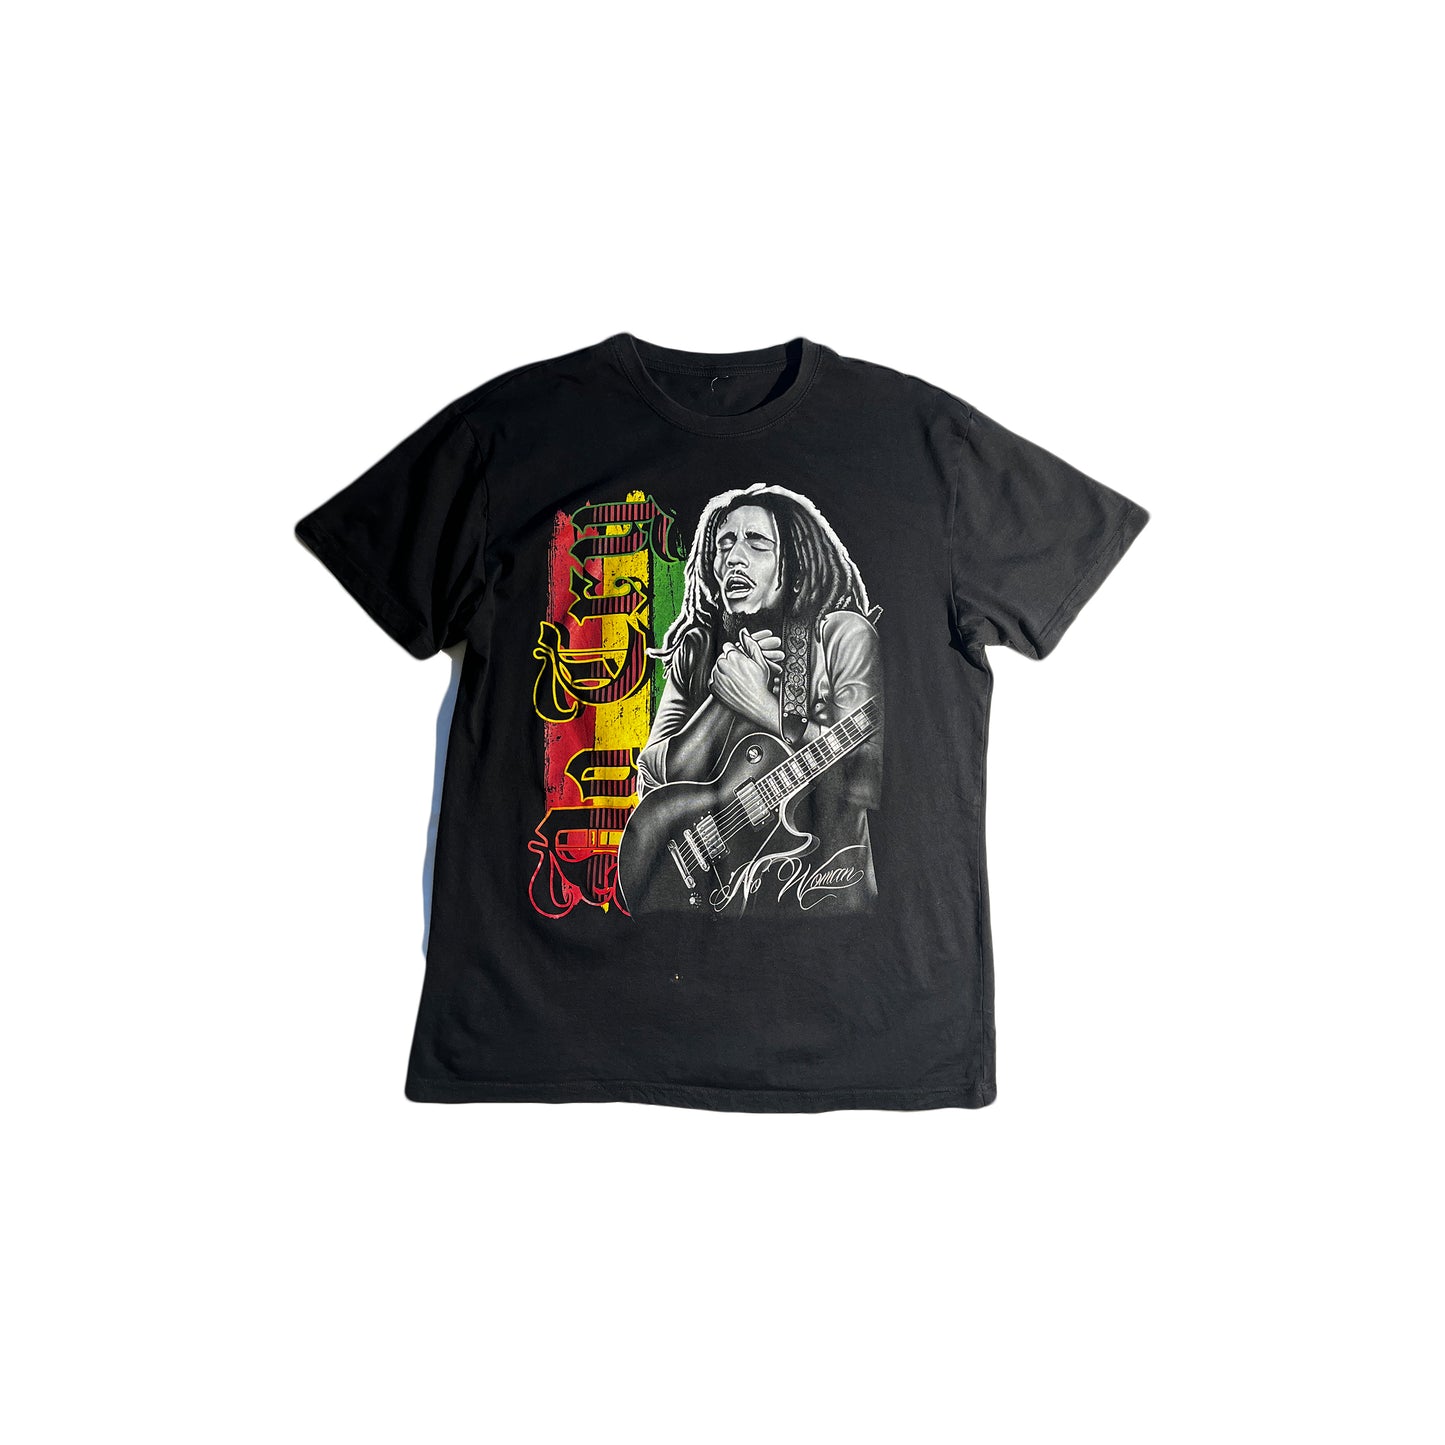 Vintage Bob Marley T-Shirt